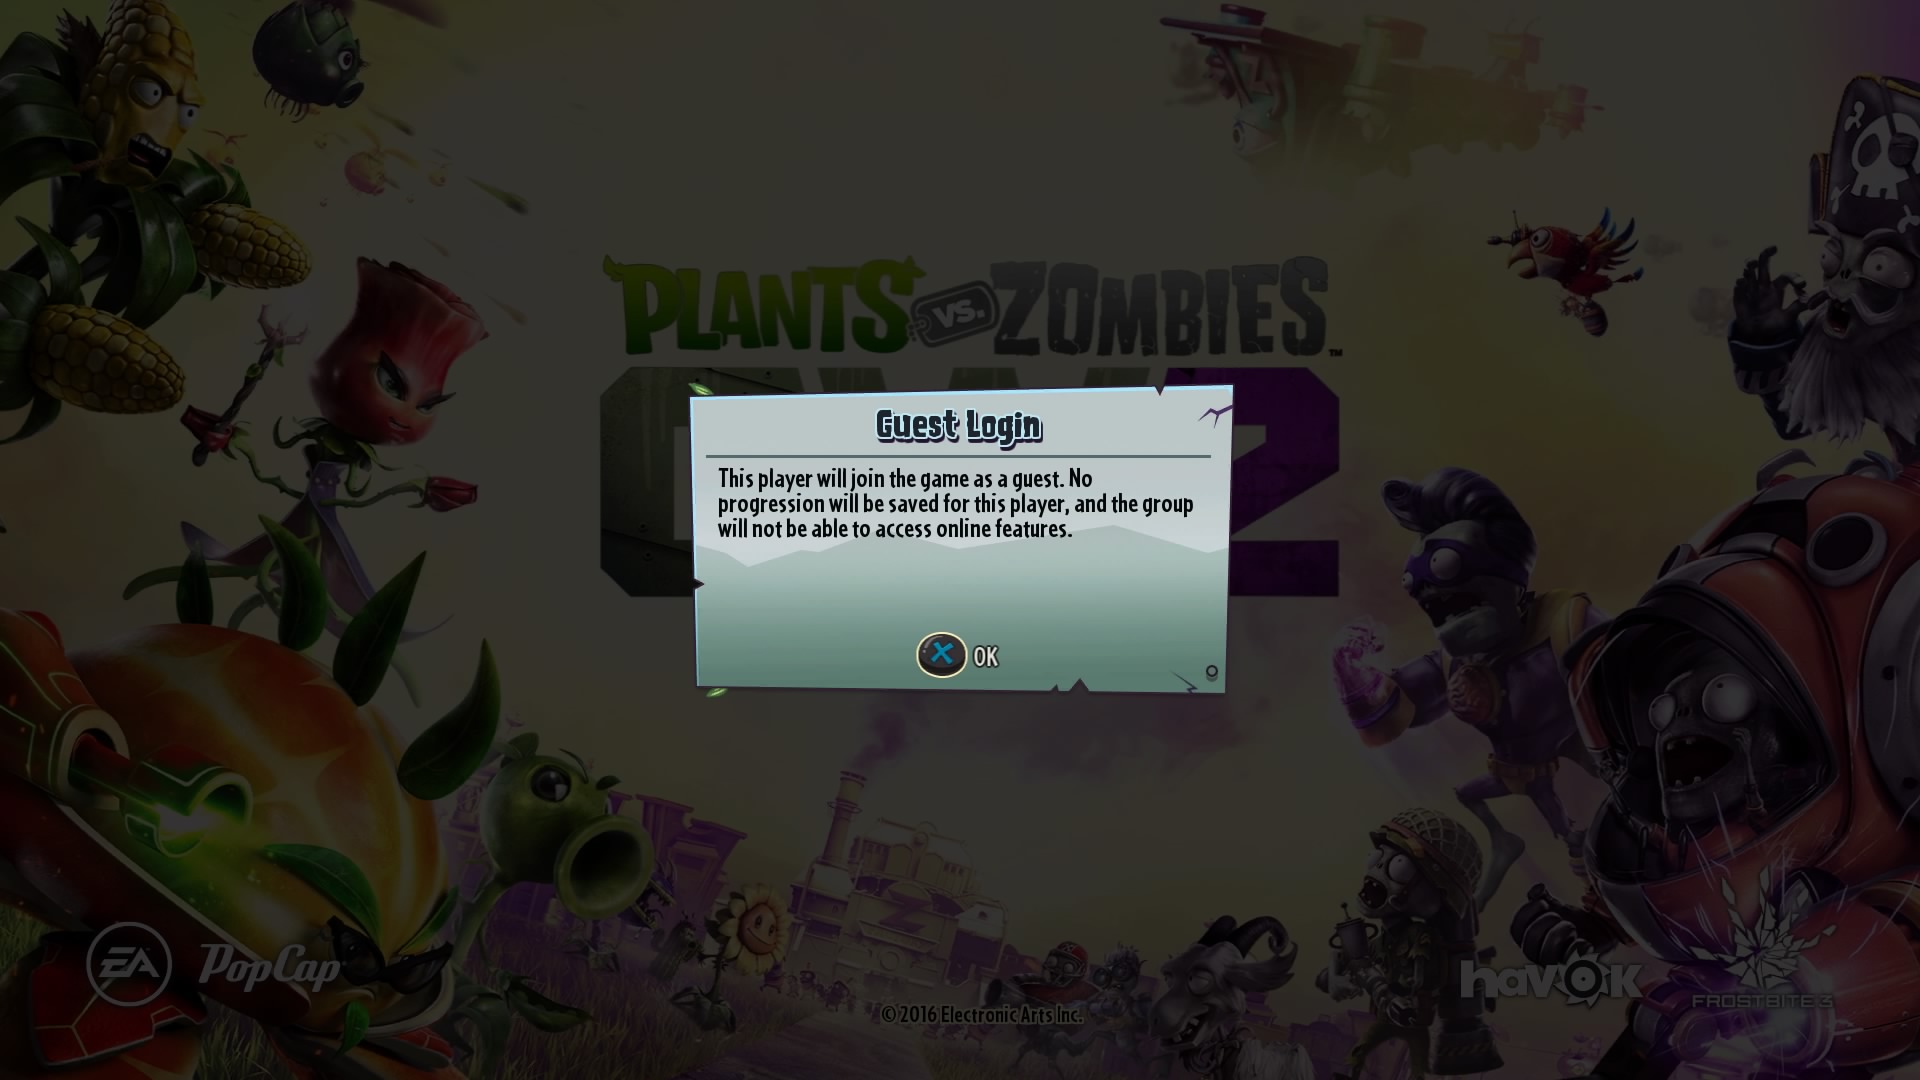 Plants vs. Zombies Garden Warfare 2 Deluxe Upgrade - Xbox One | Electronic  Arts | GameStop